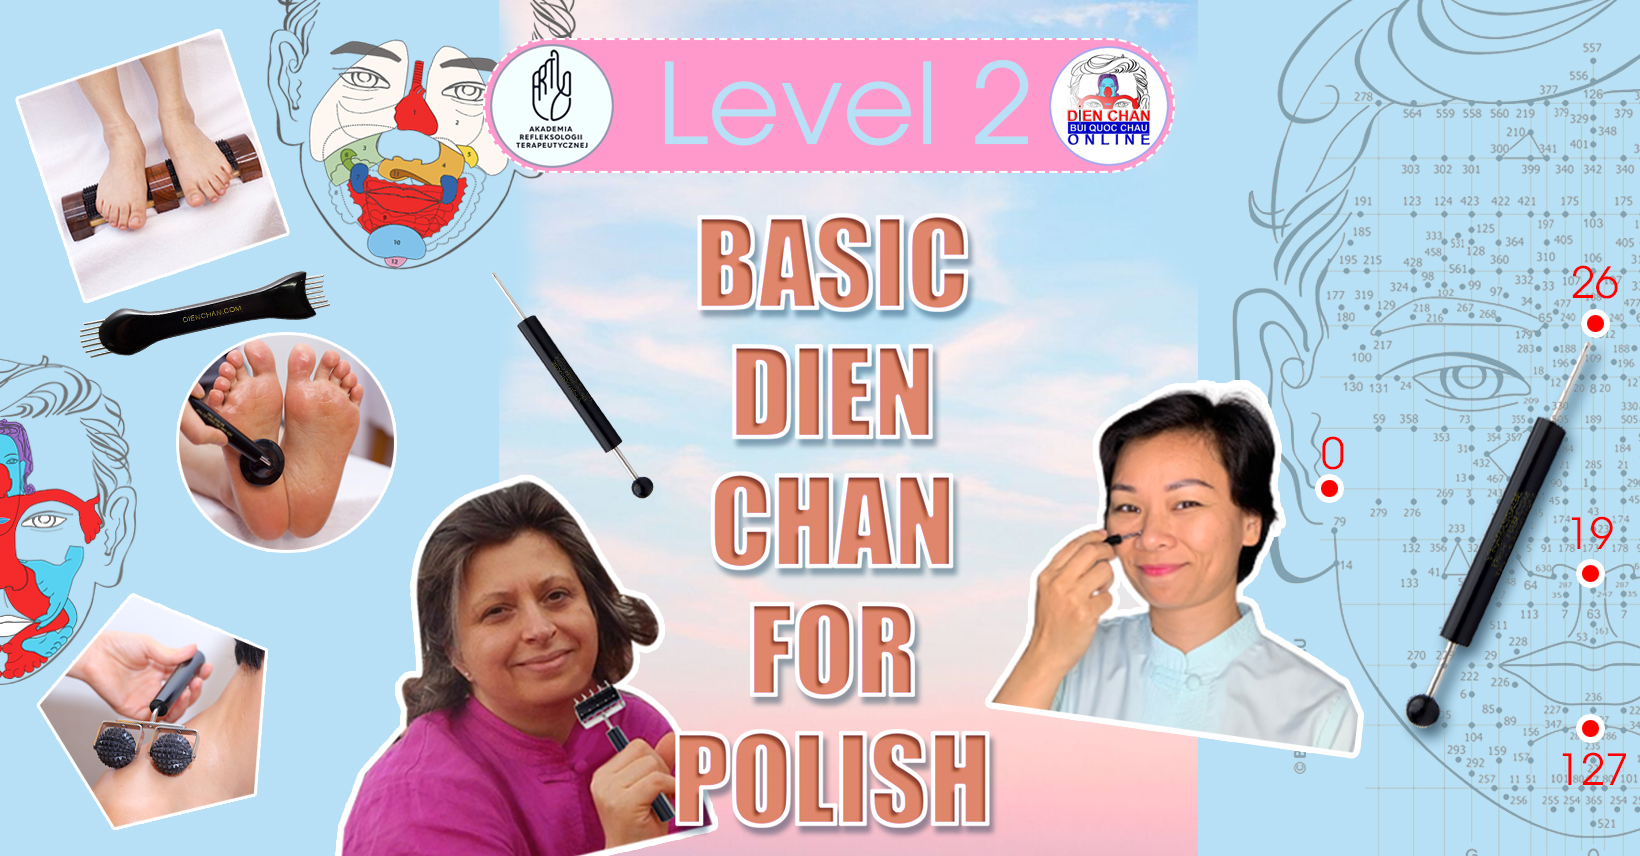 DIEN CHAN ABC - POLISH LANGUAGE (LEVEL 2 & LEVEL 3)